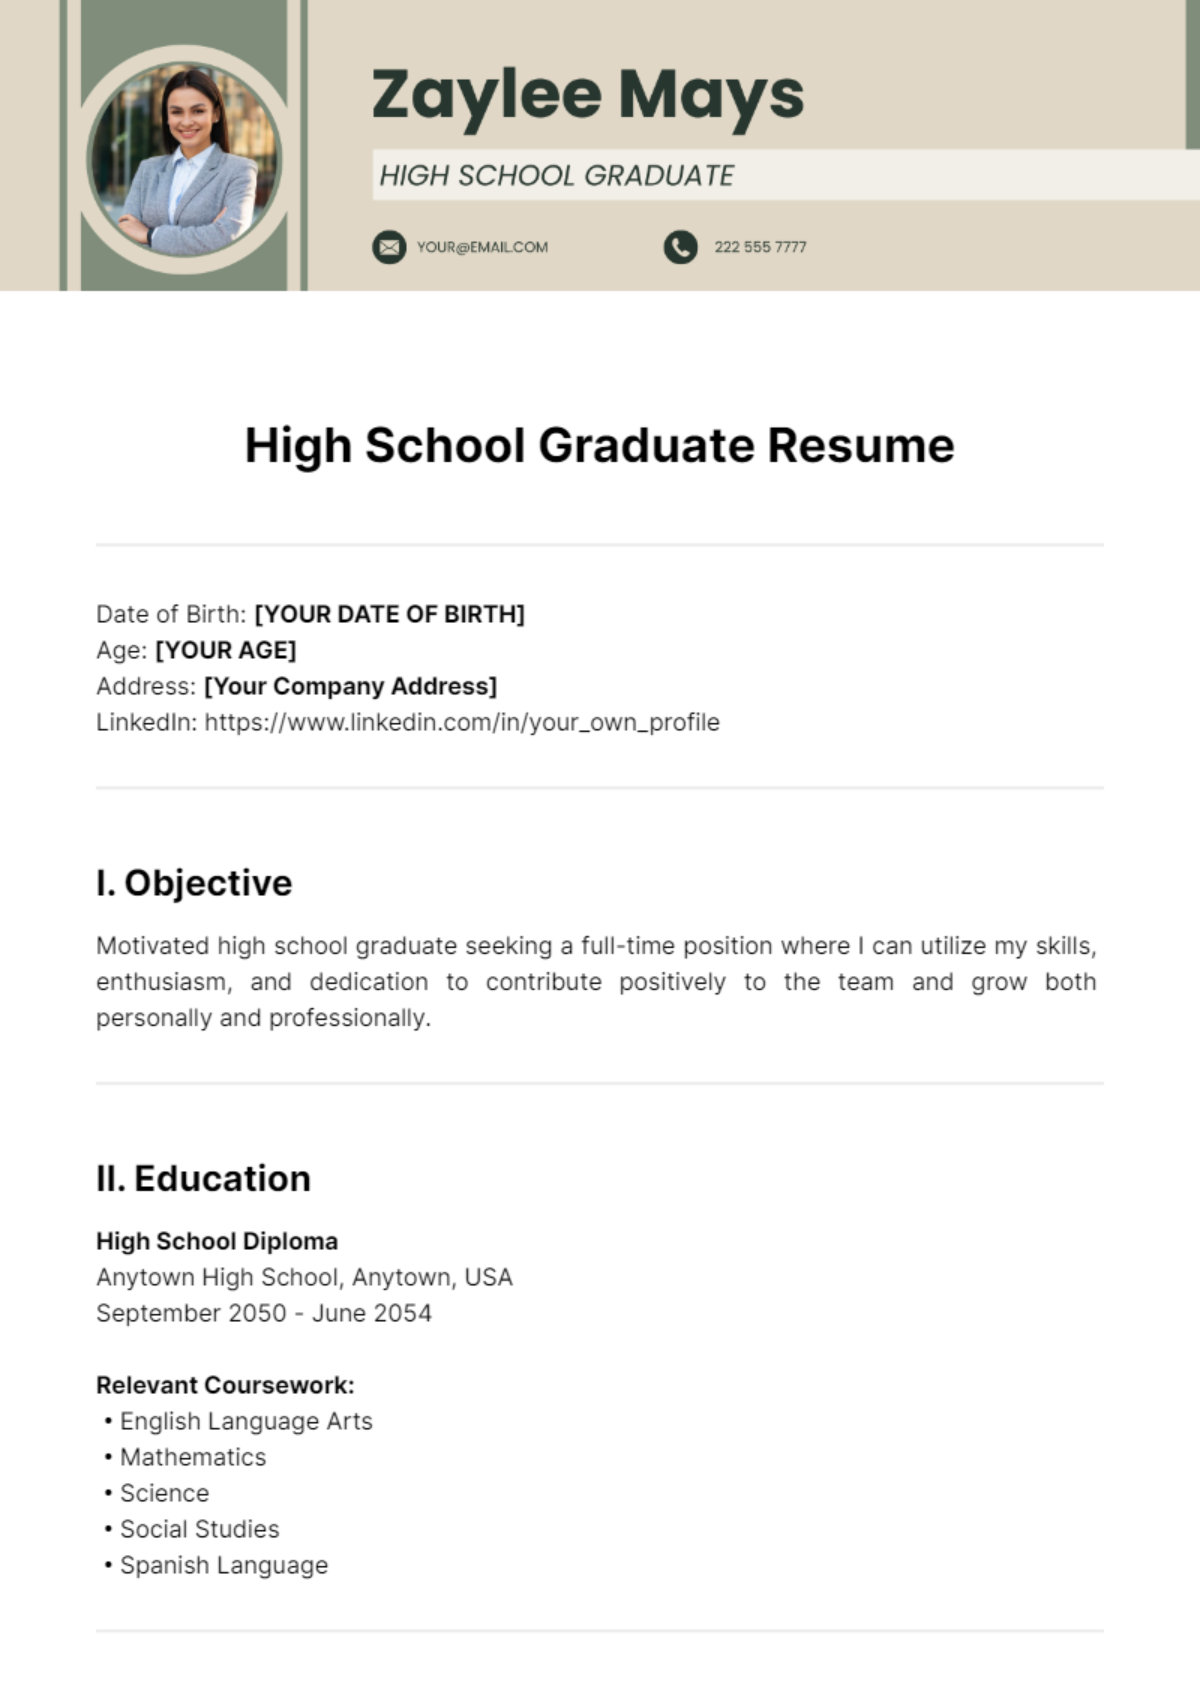 High School Graduate Resume Template